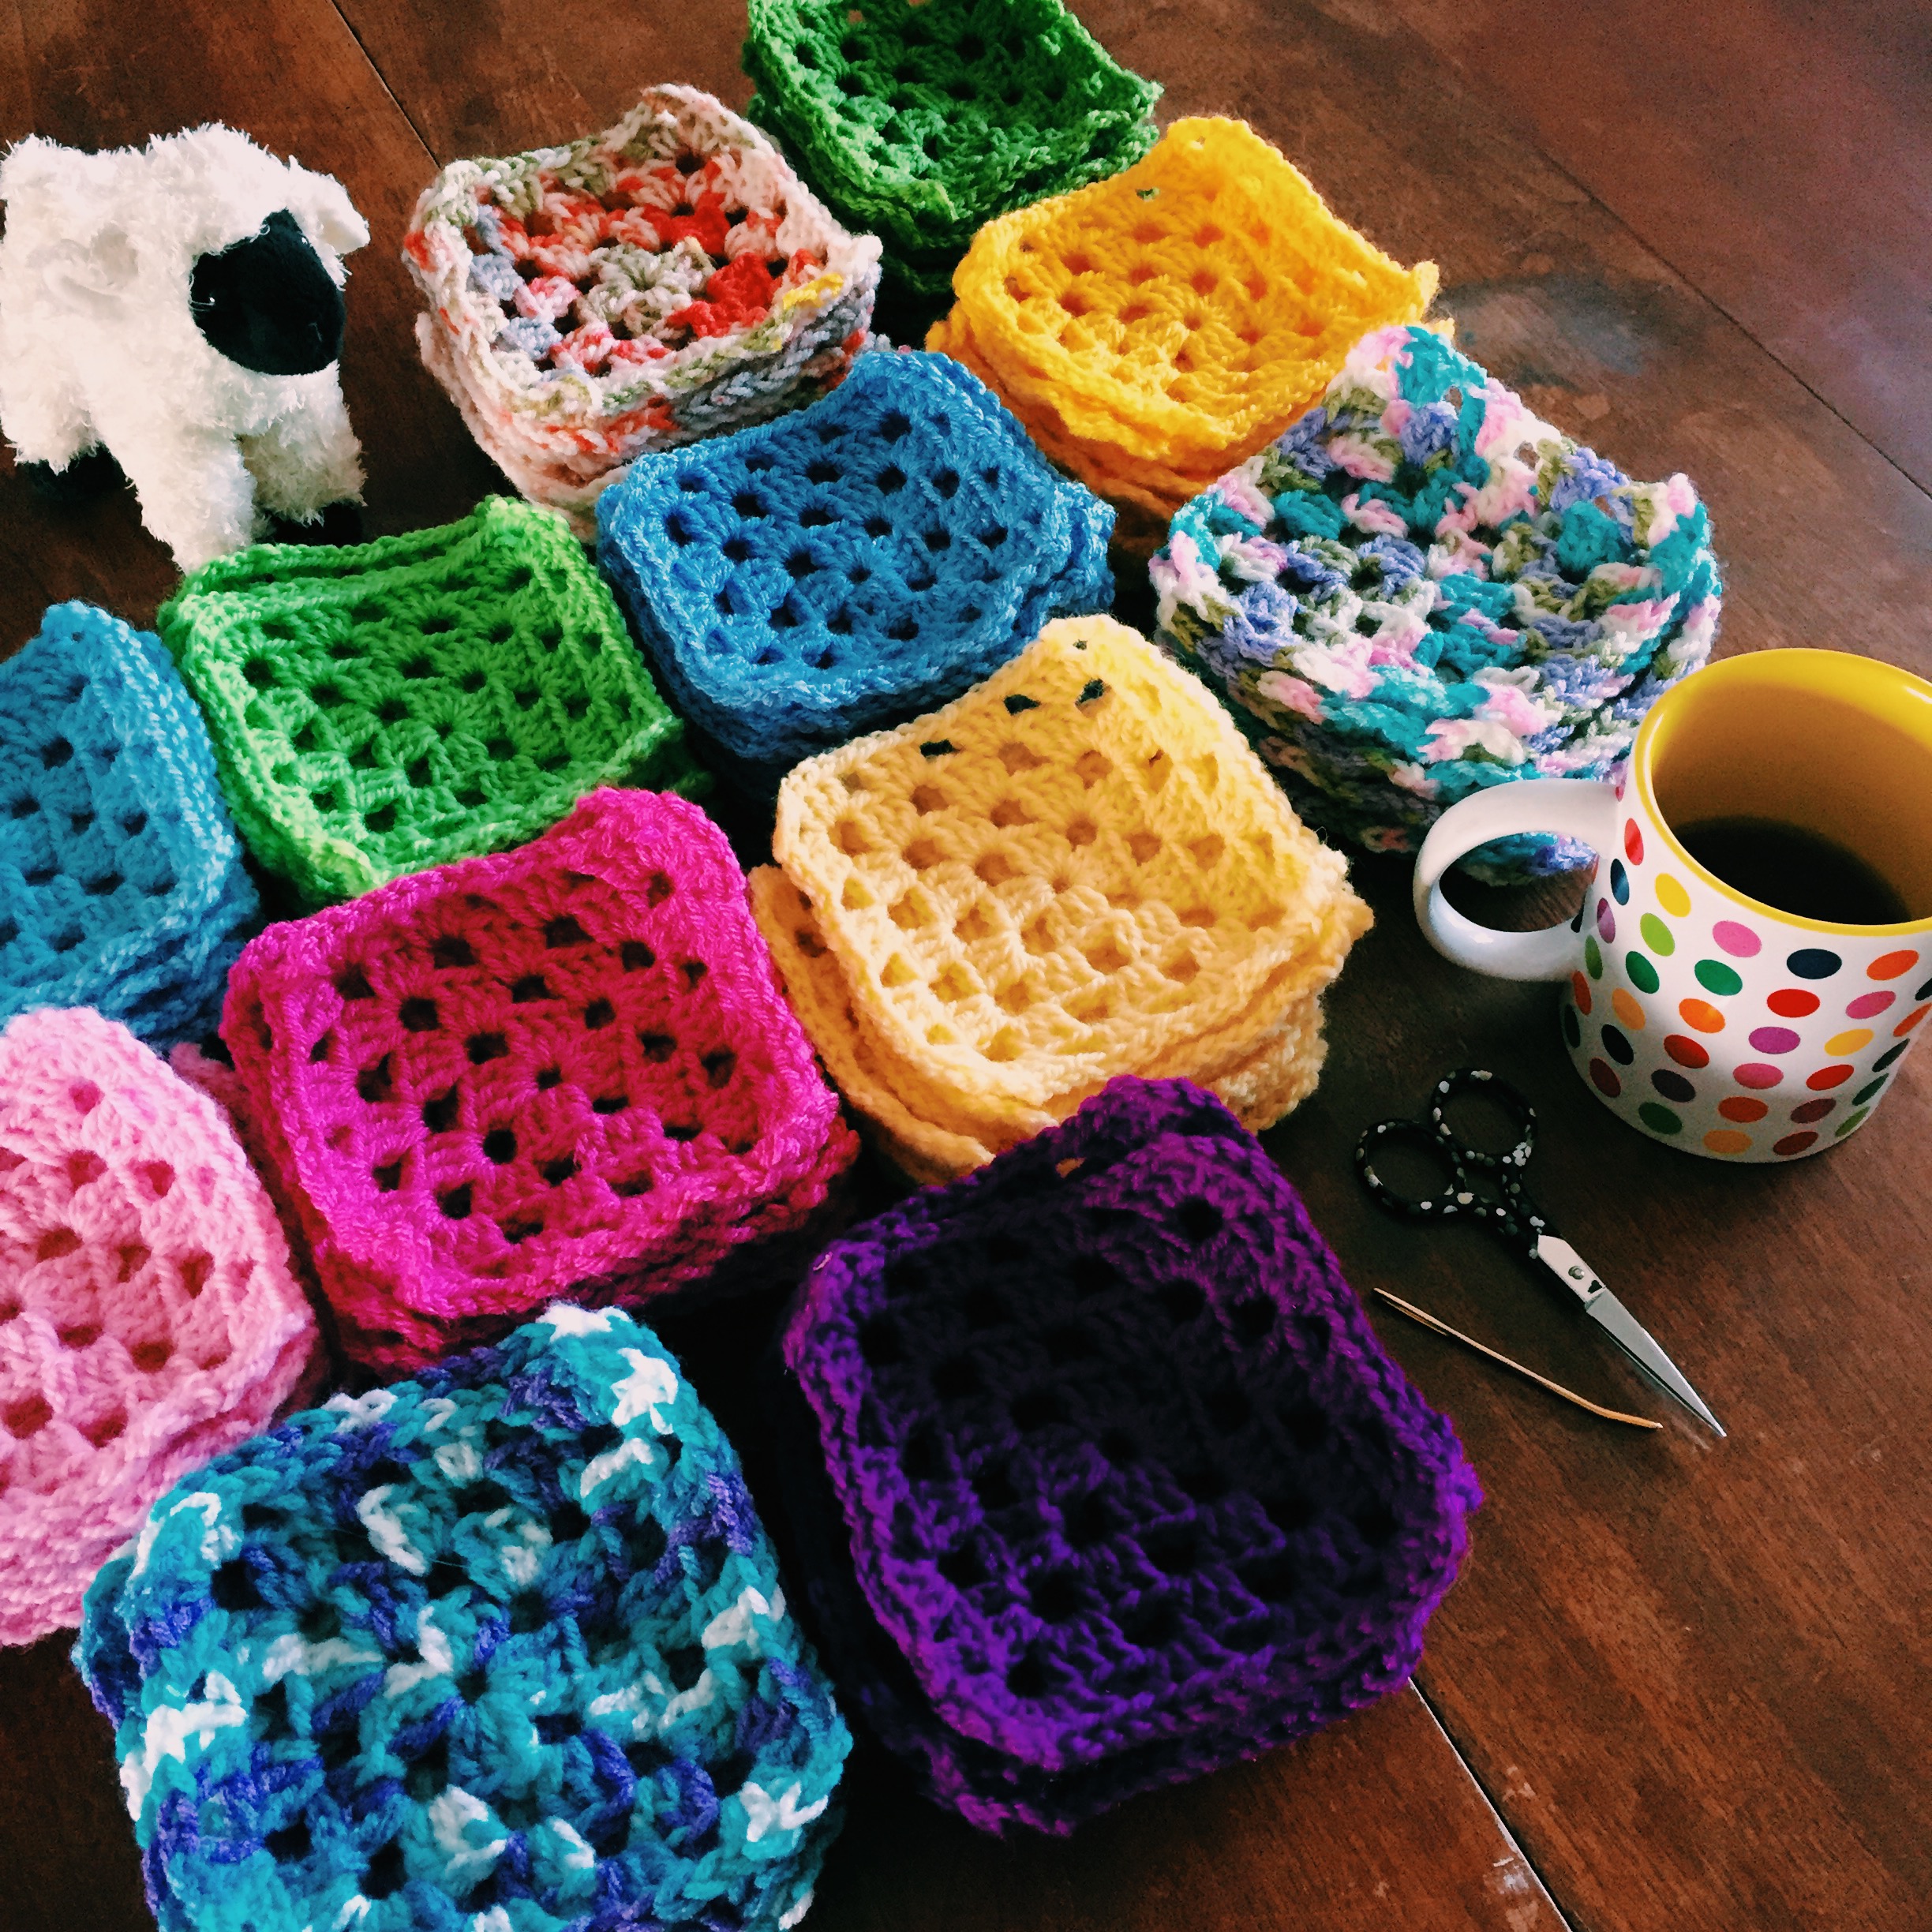 Granny Square Scrap-ghan | Crochet Pattern by MadameStitch